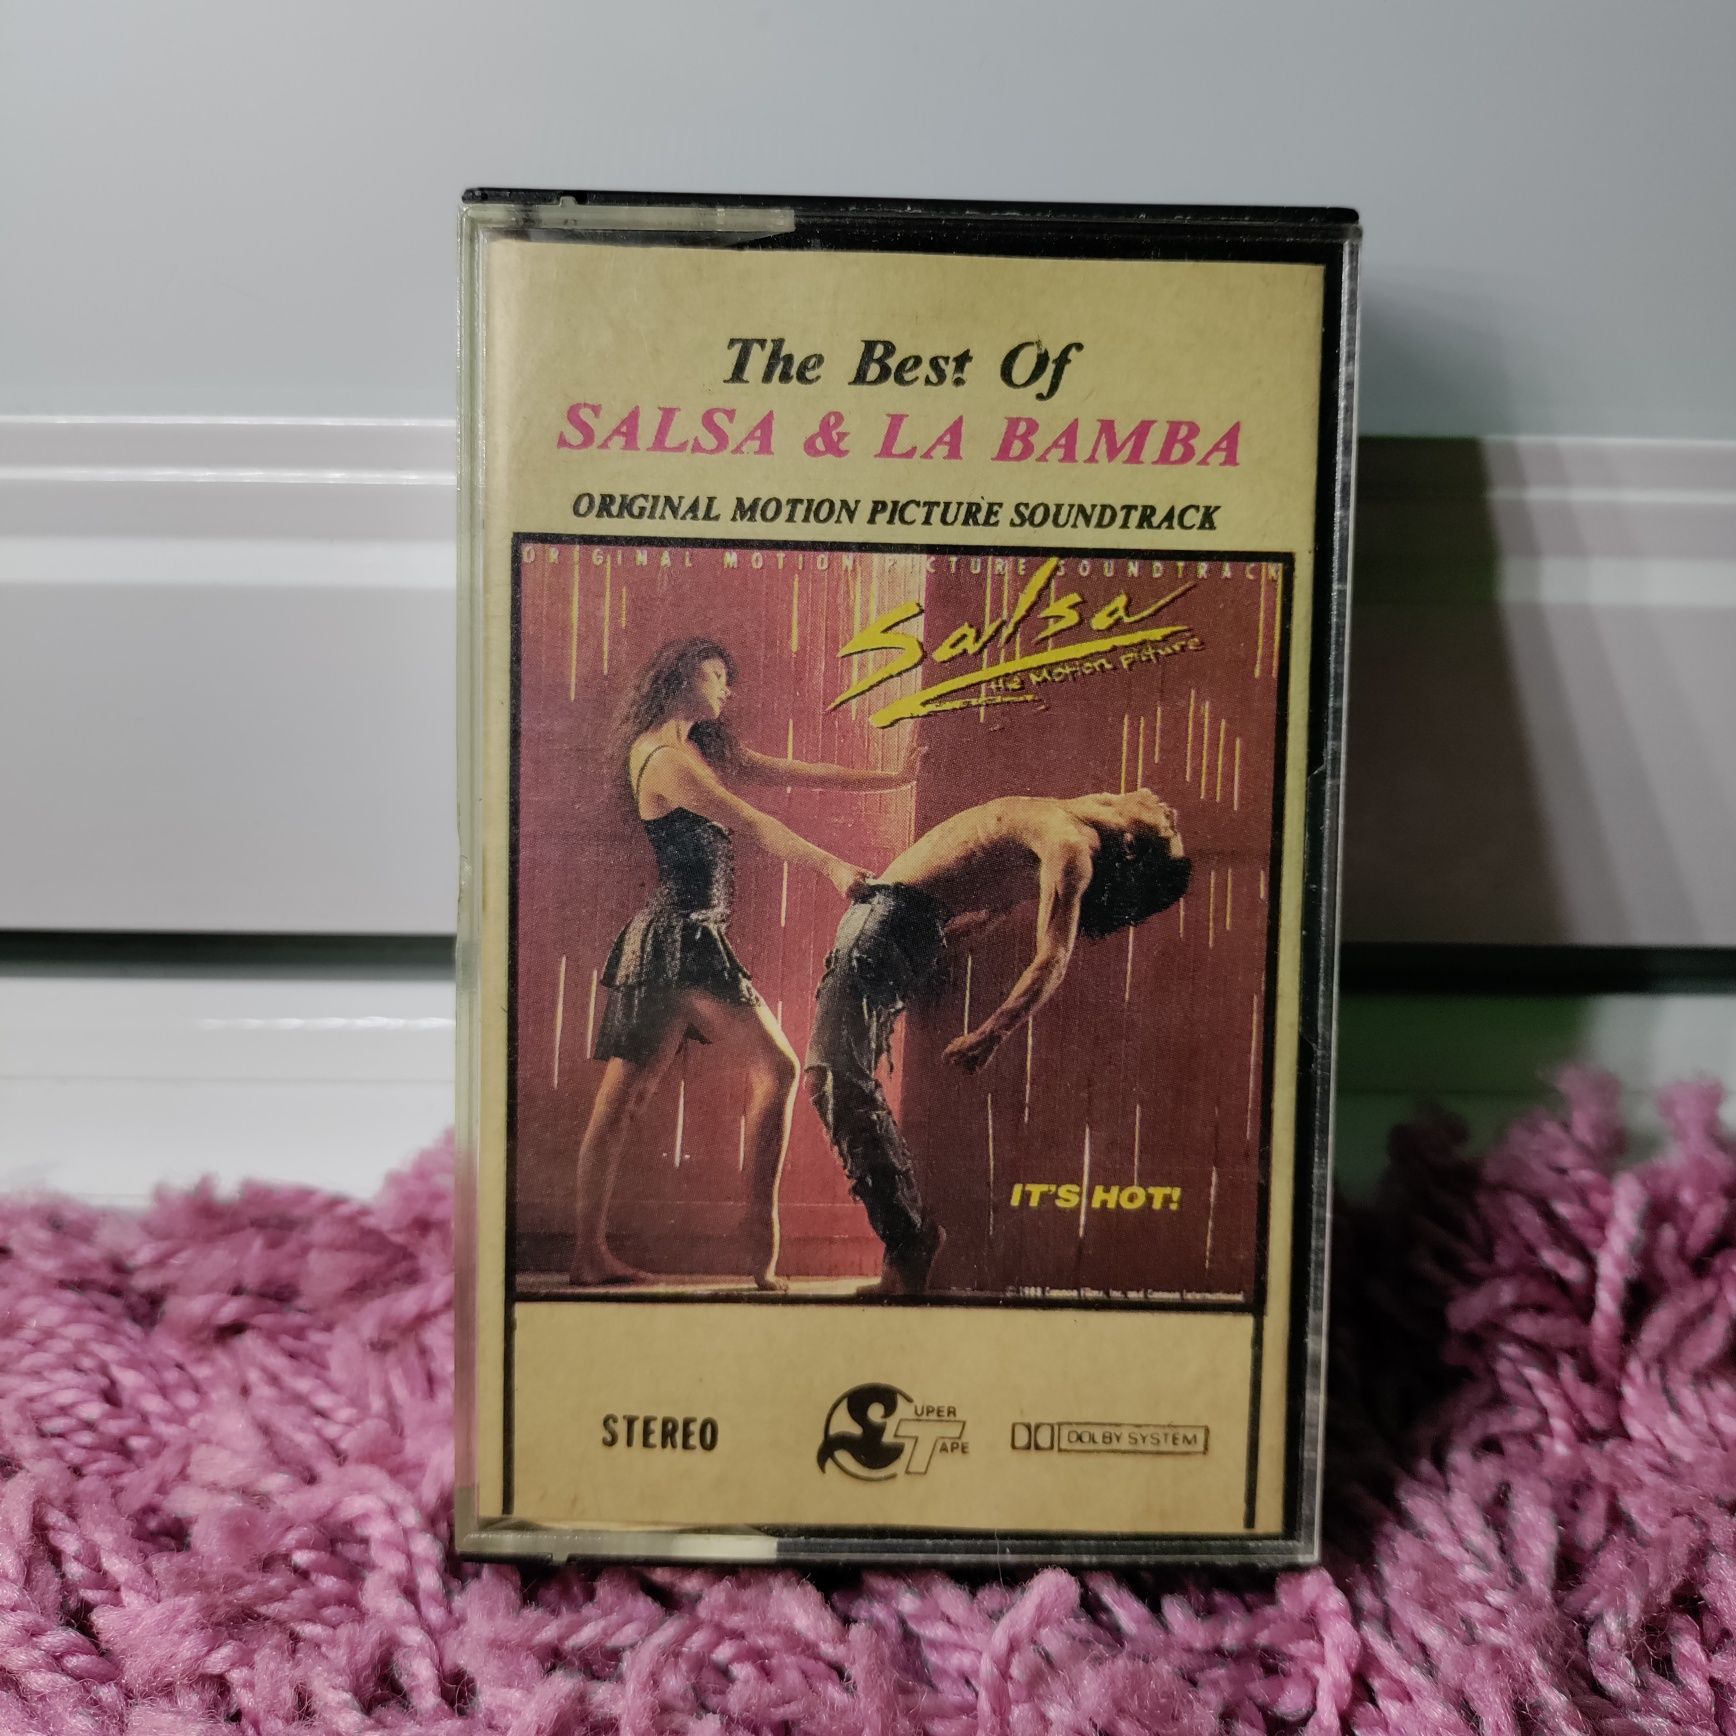 Kaseta magnetofonowa The Best Of Salsa & La Bamba It's hot kolekcja